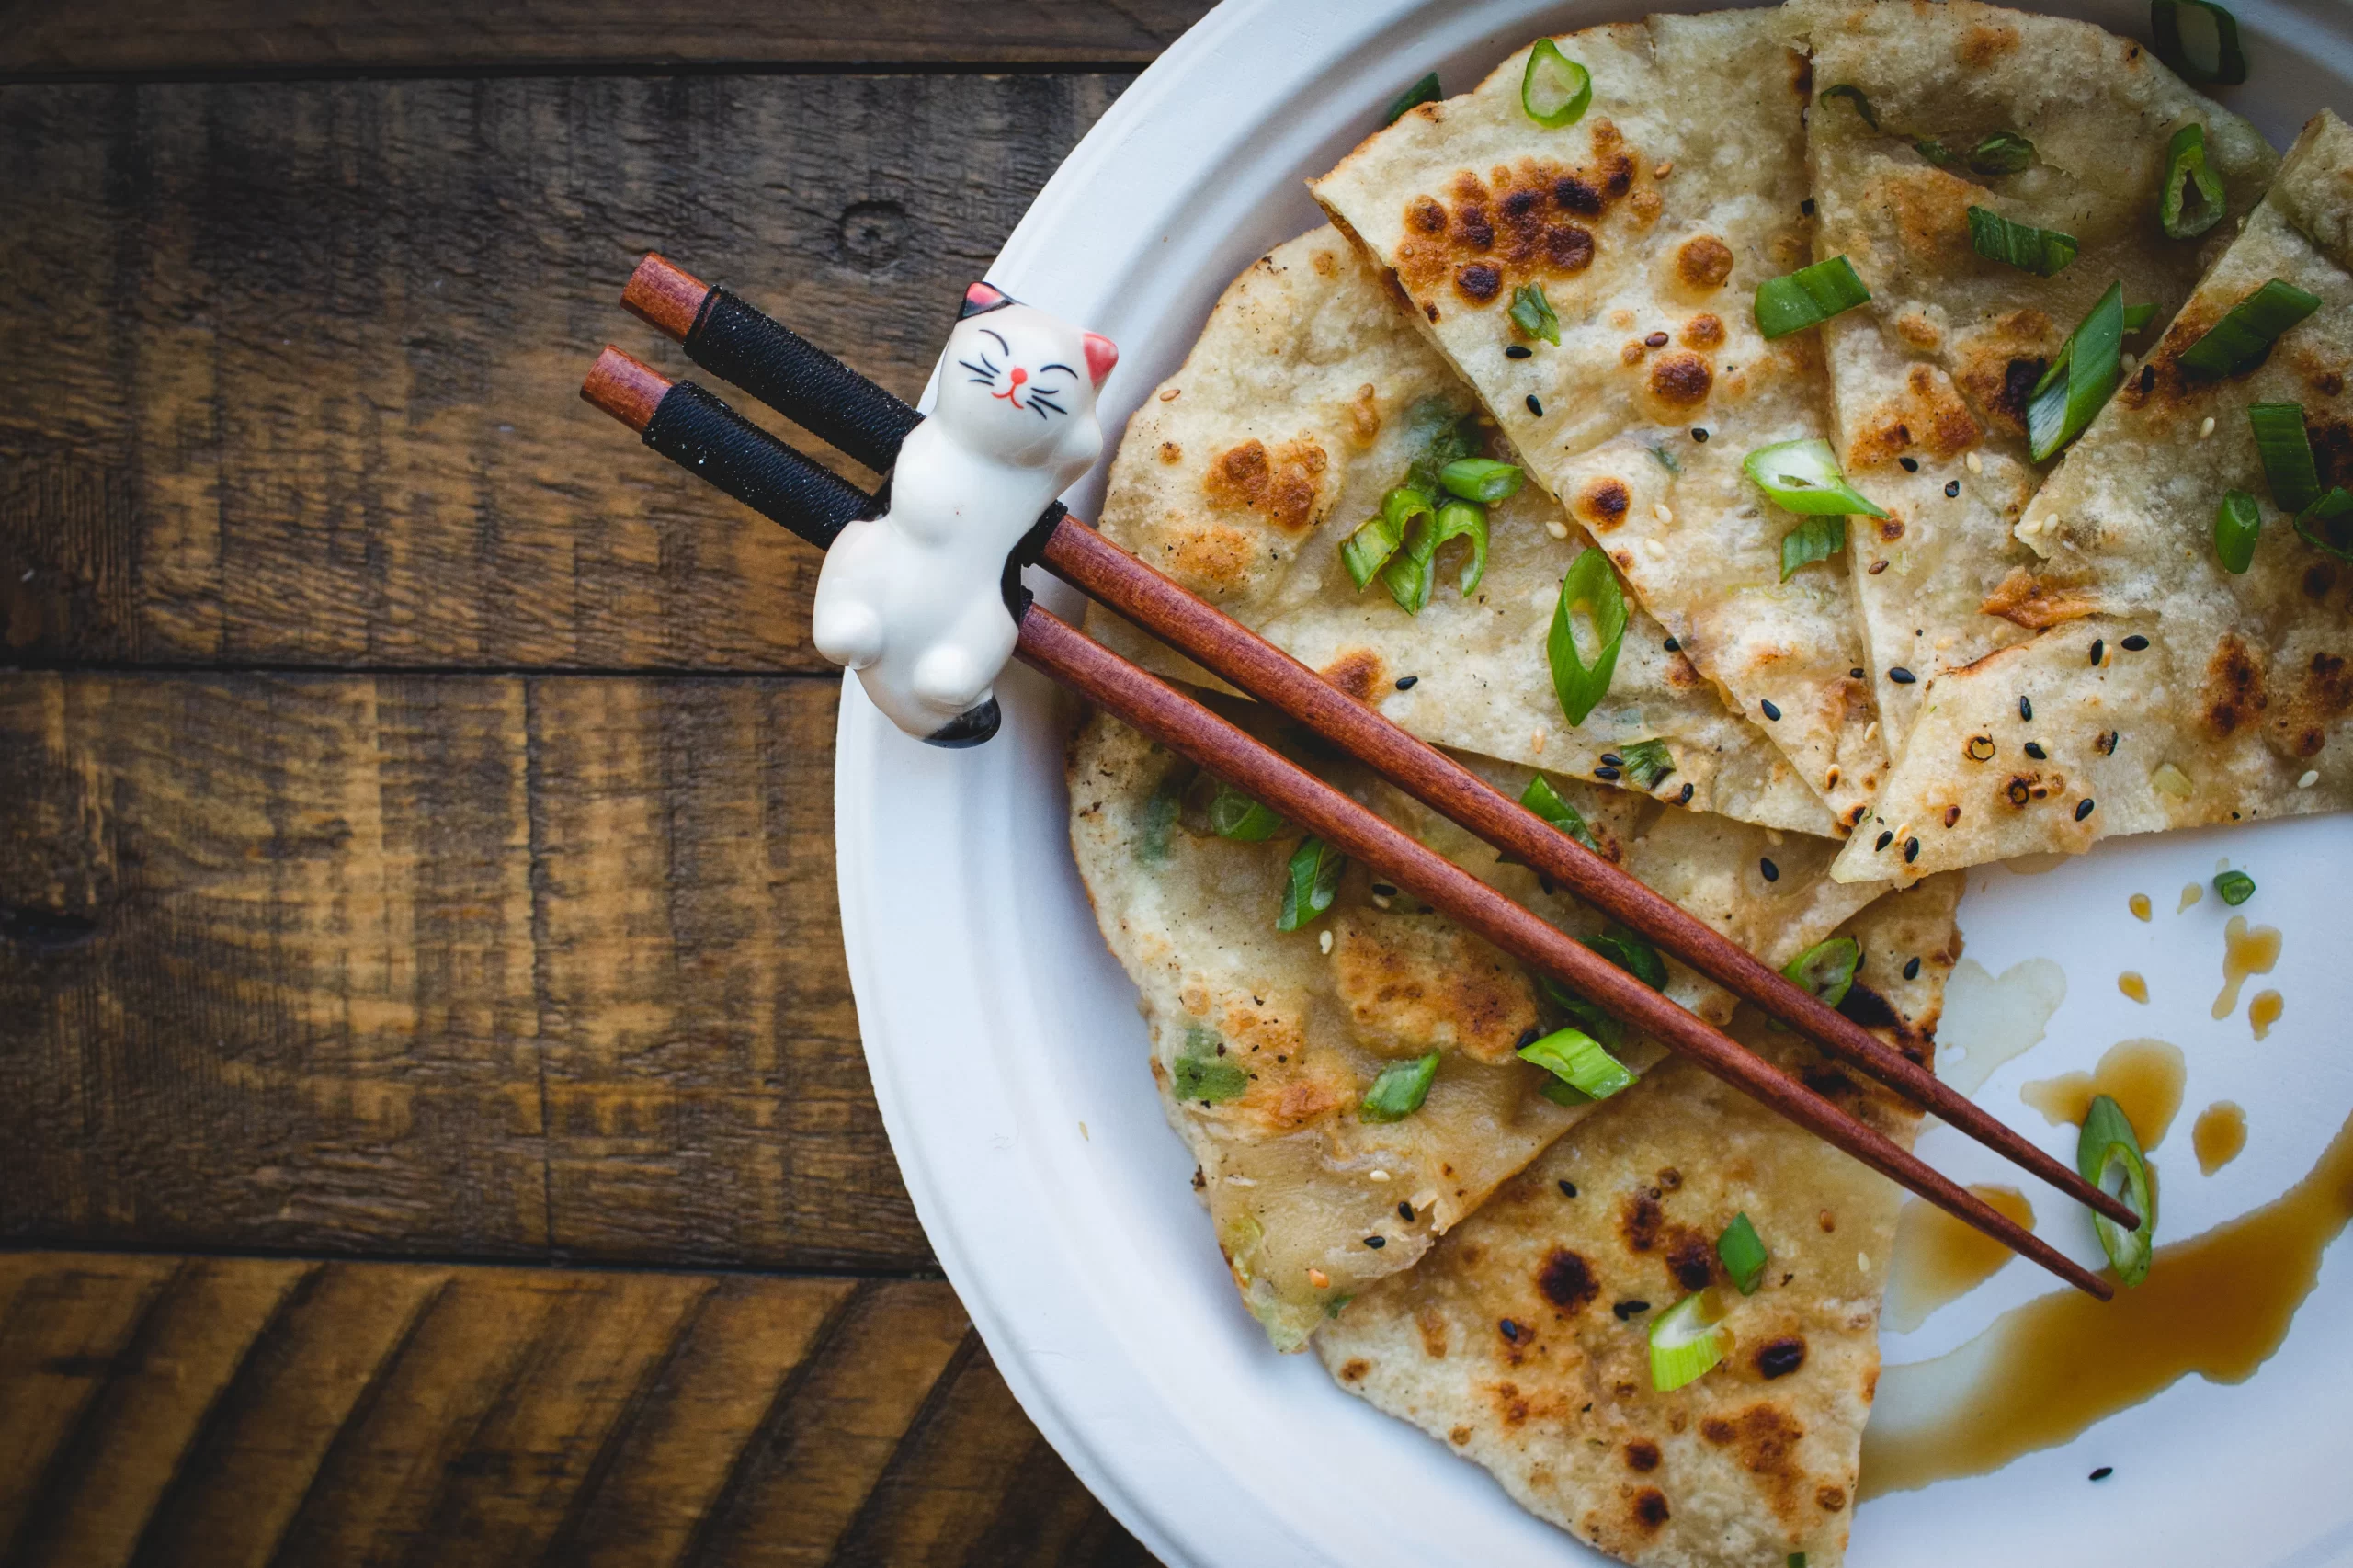 Hong's Chinese Dumplings - Scallion Pancakes